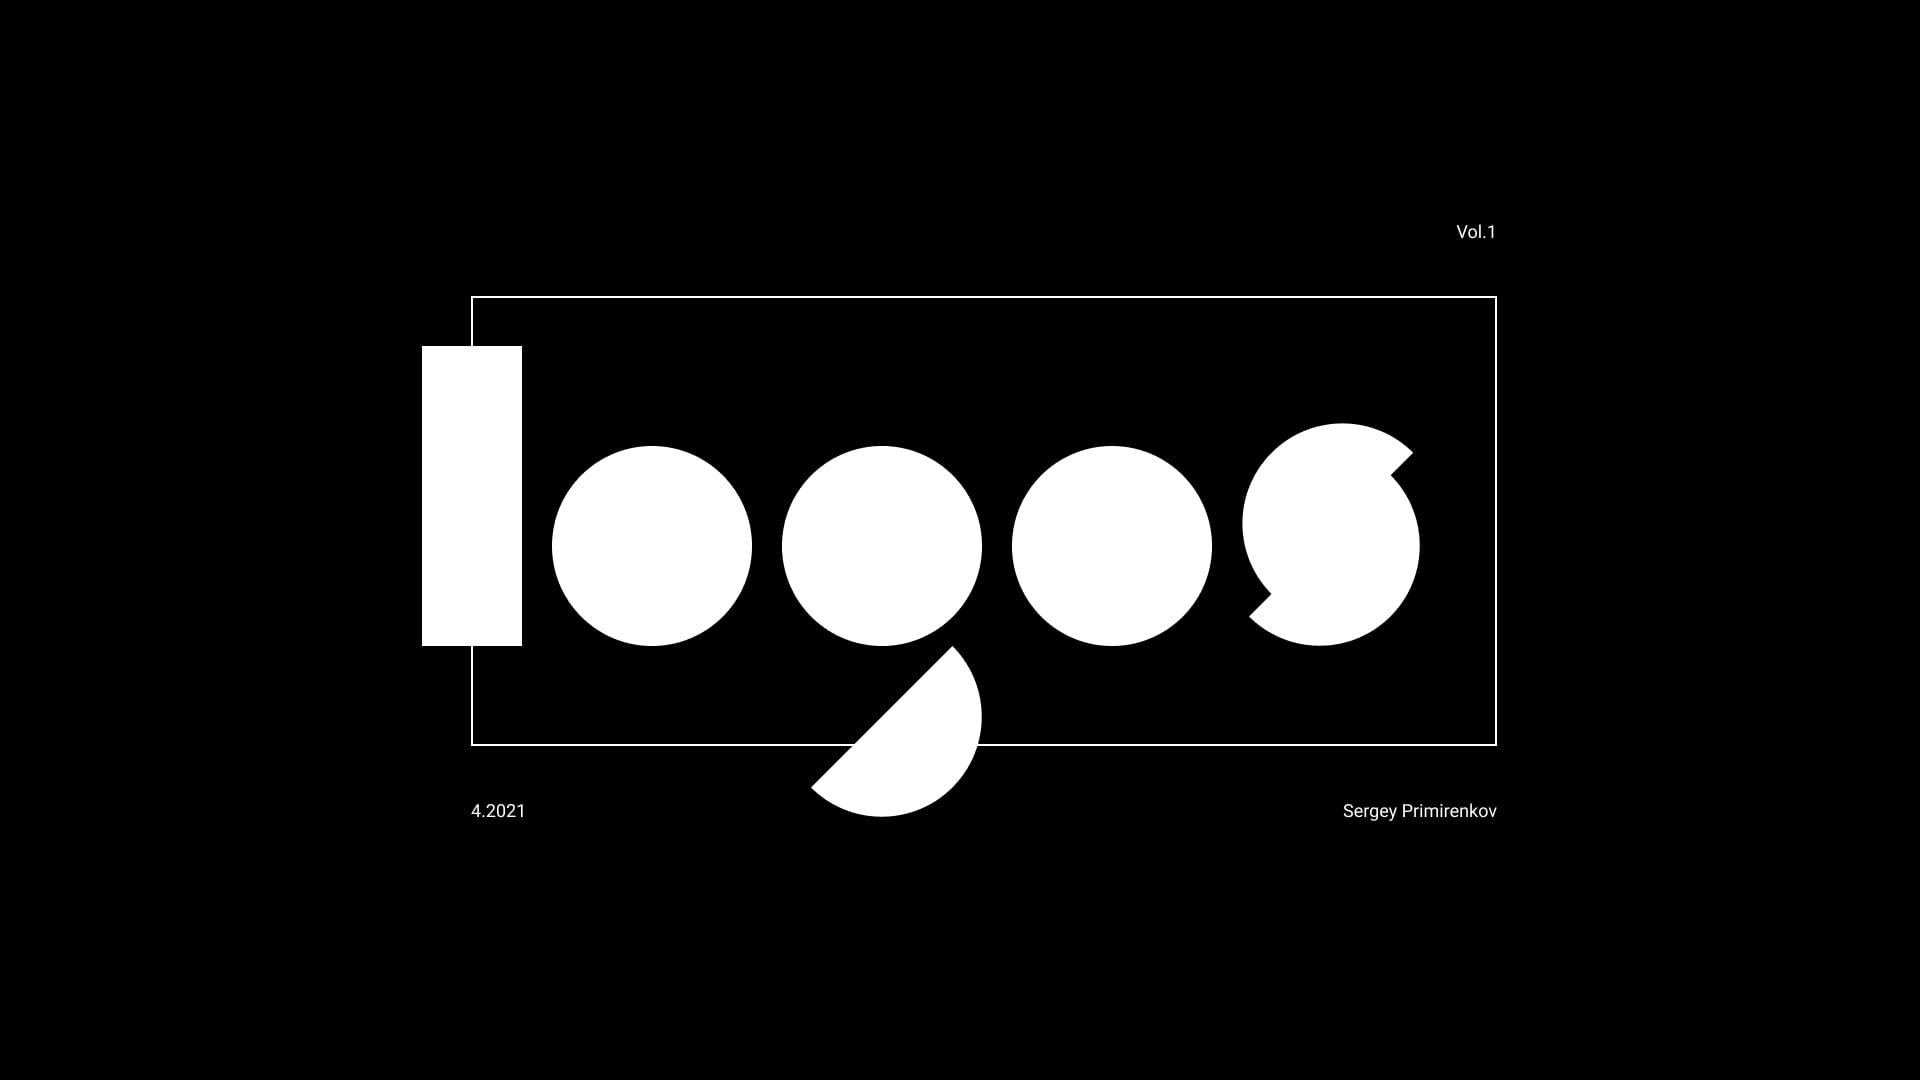 logos Vol.1